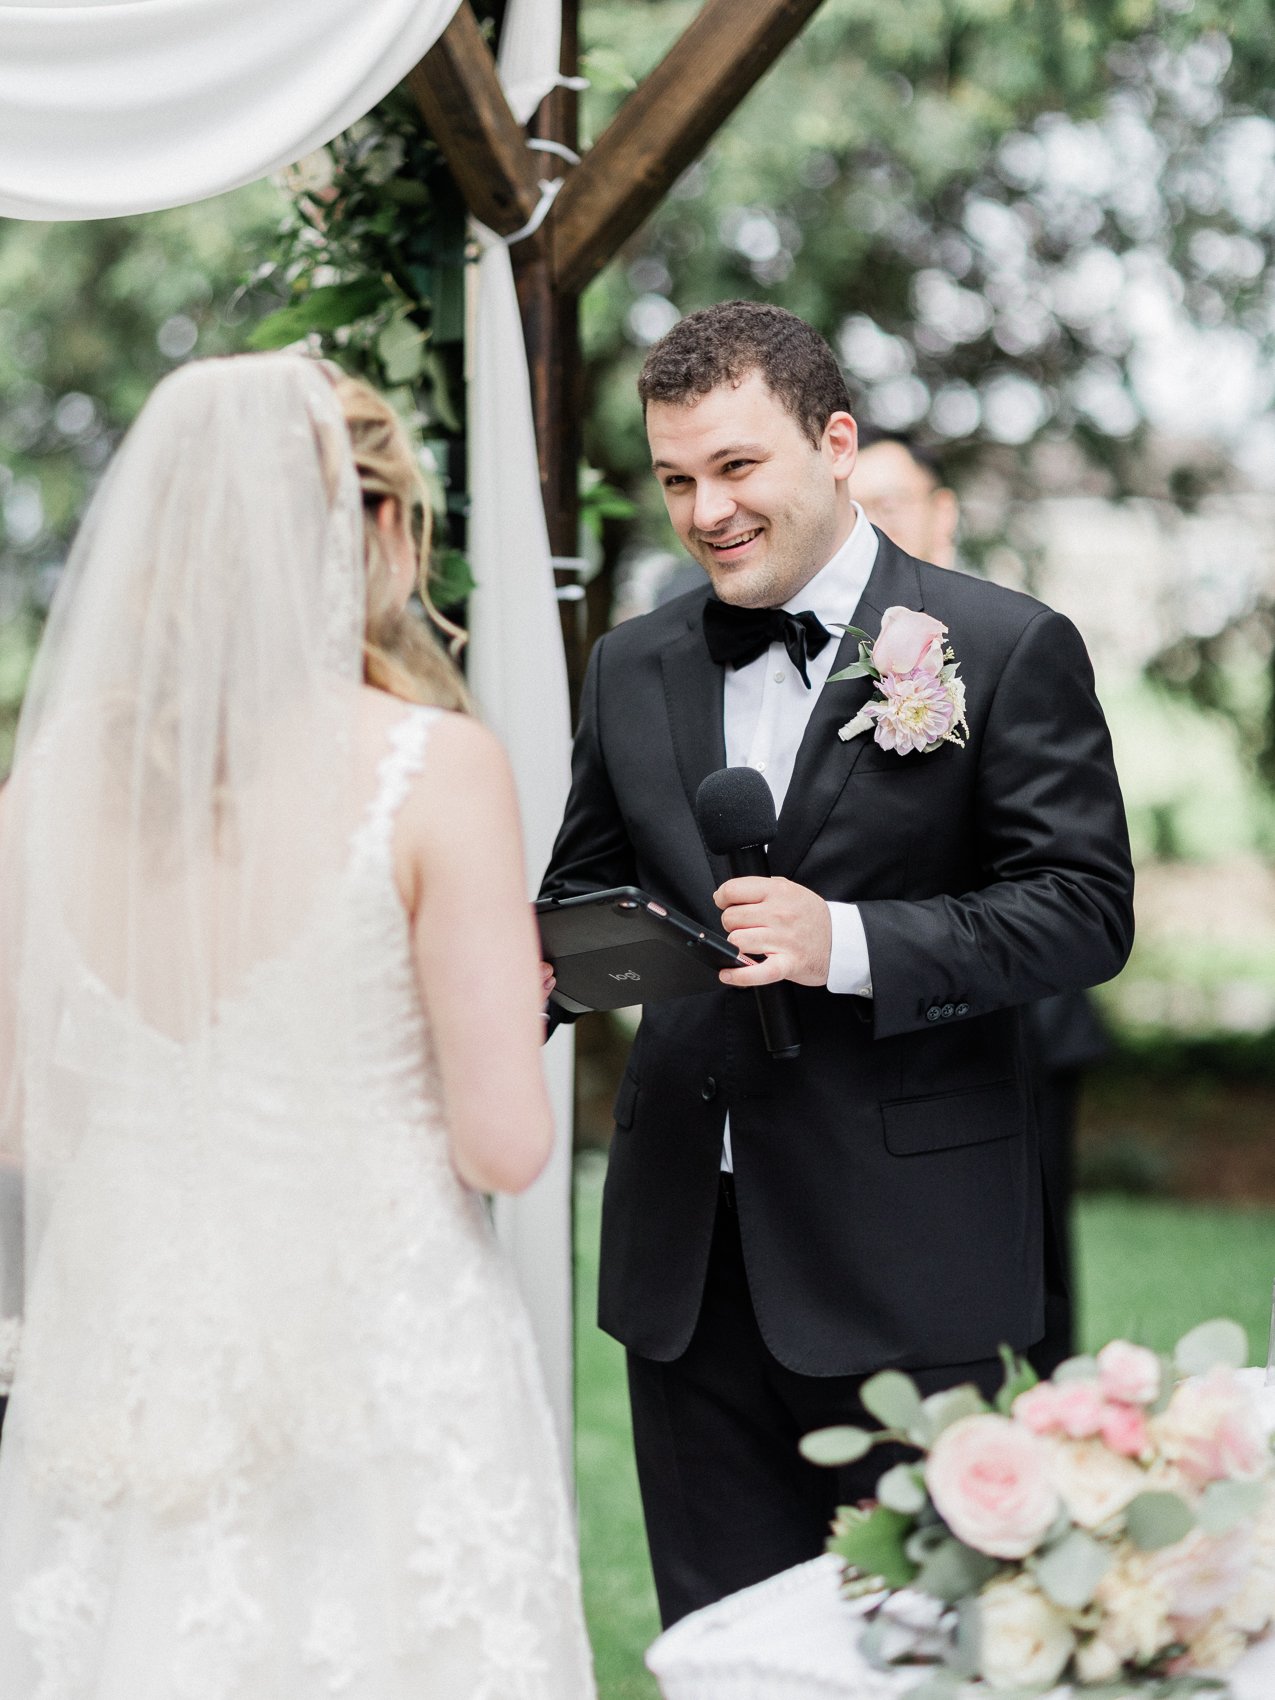 Courtney & Kirill Wedding Web 2021 - 401.jpg